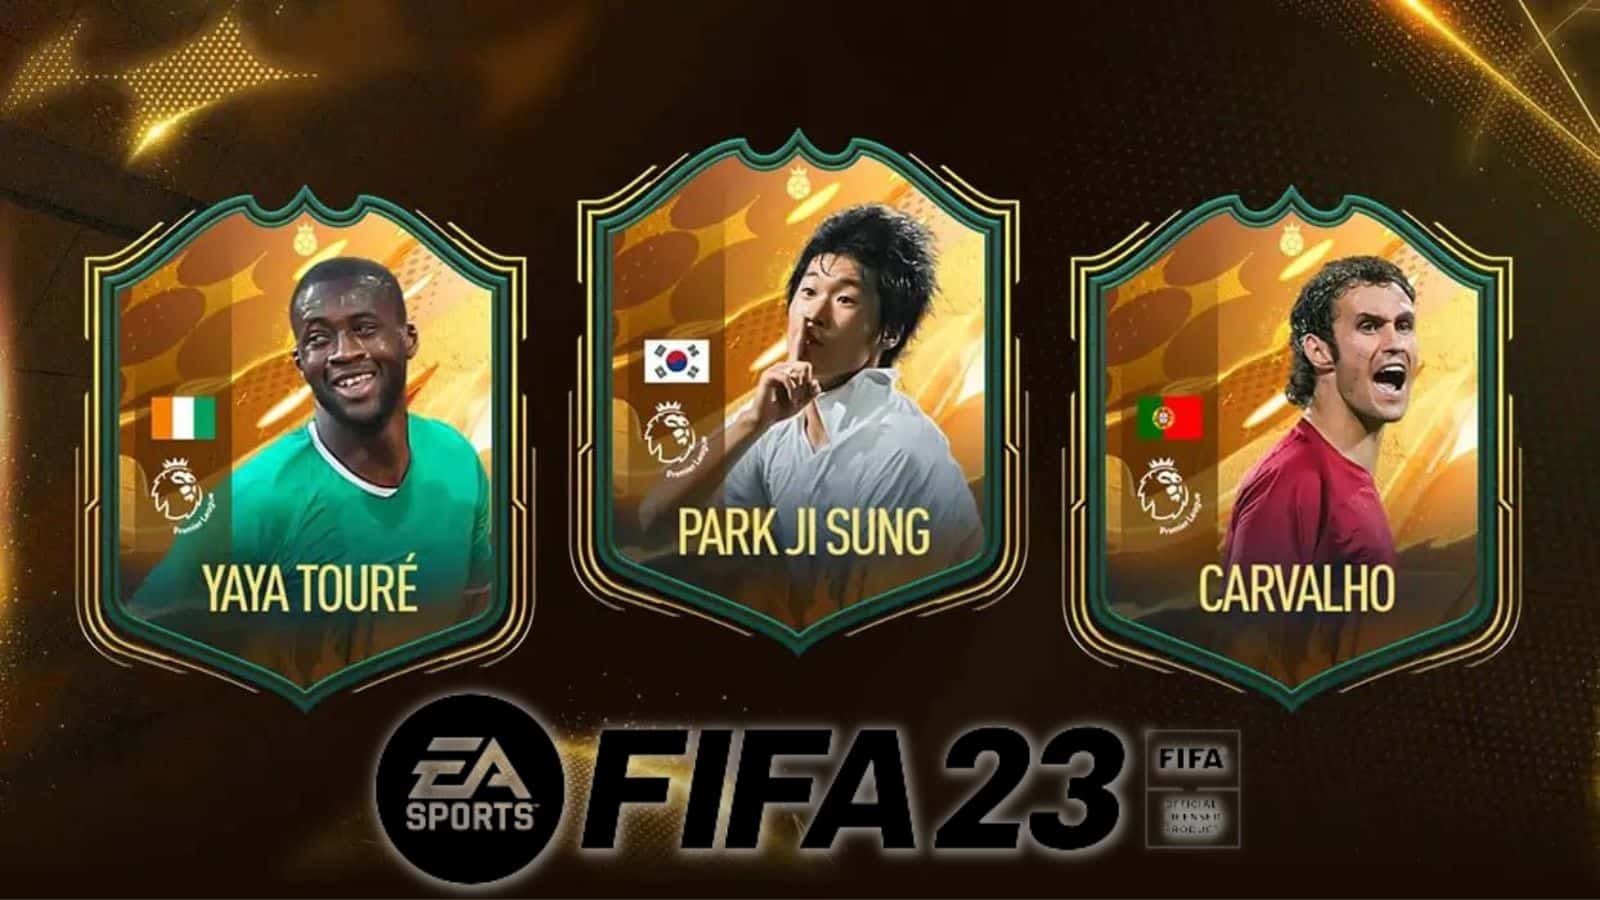 FIFA 23 FUT Hero cards revealed: Yaya Toure, Park Ji Sung, Carvalho, more